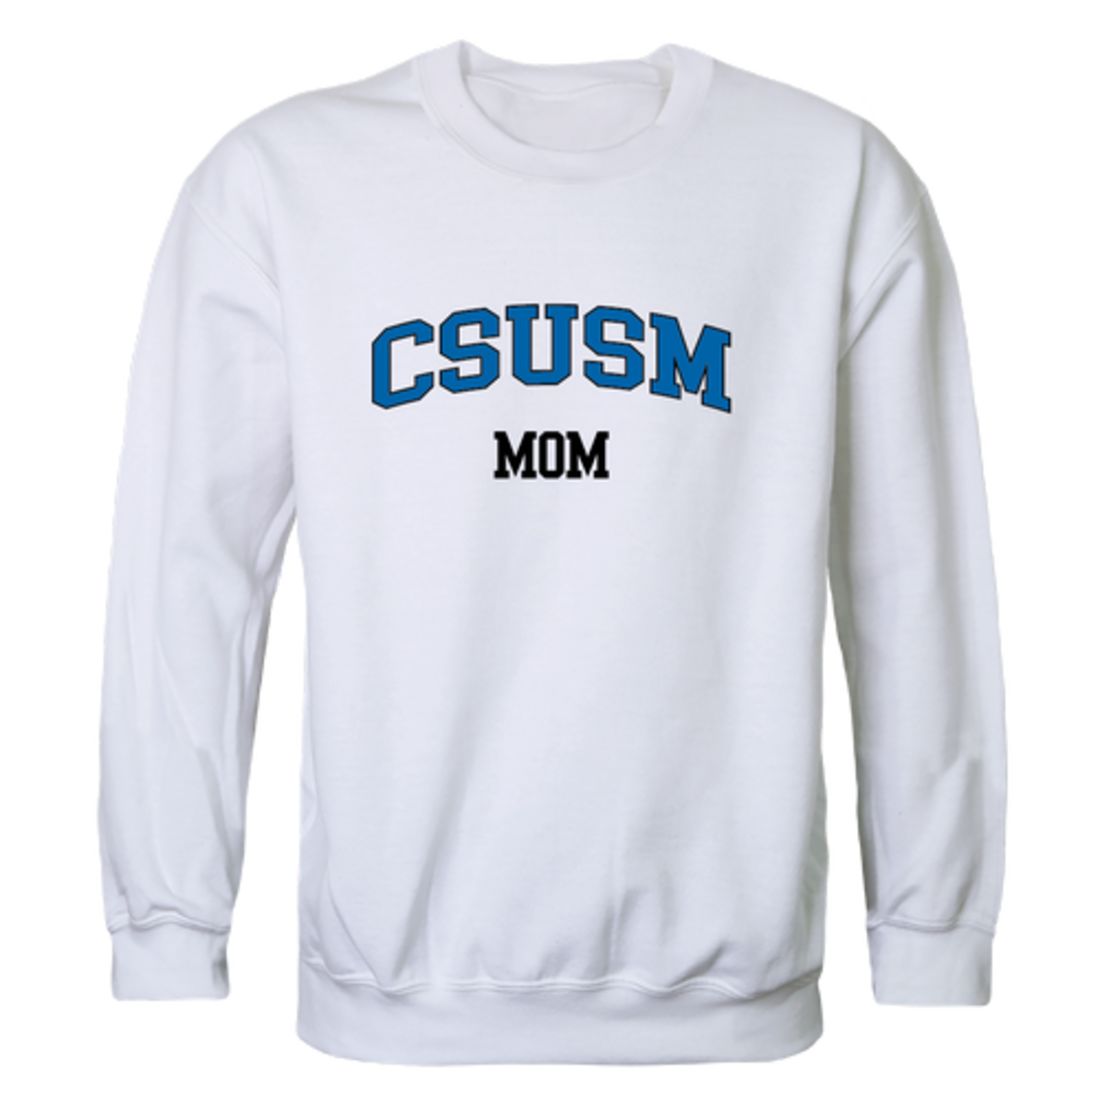 California State University San Marcos Cougars Mom Crewneck Sweatshirt